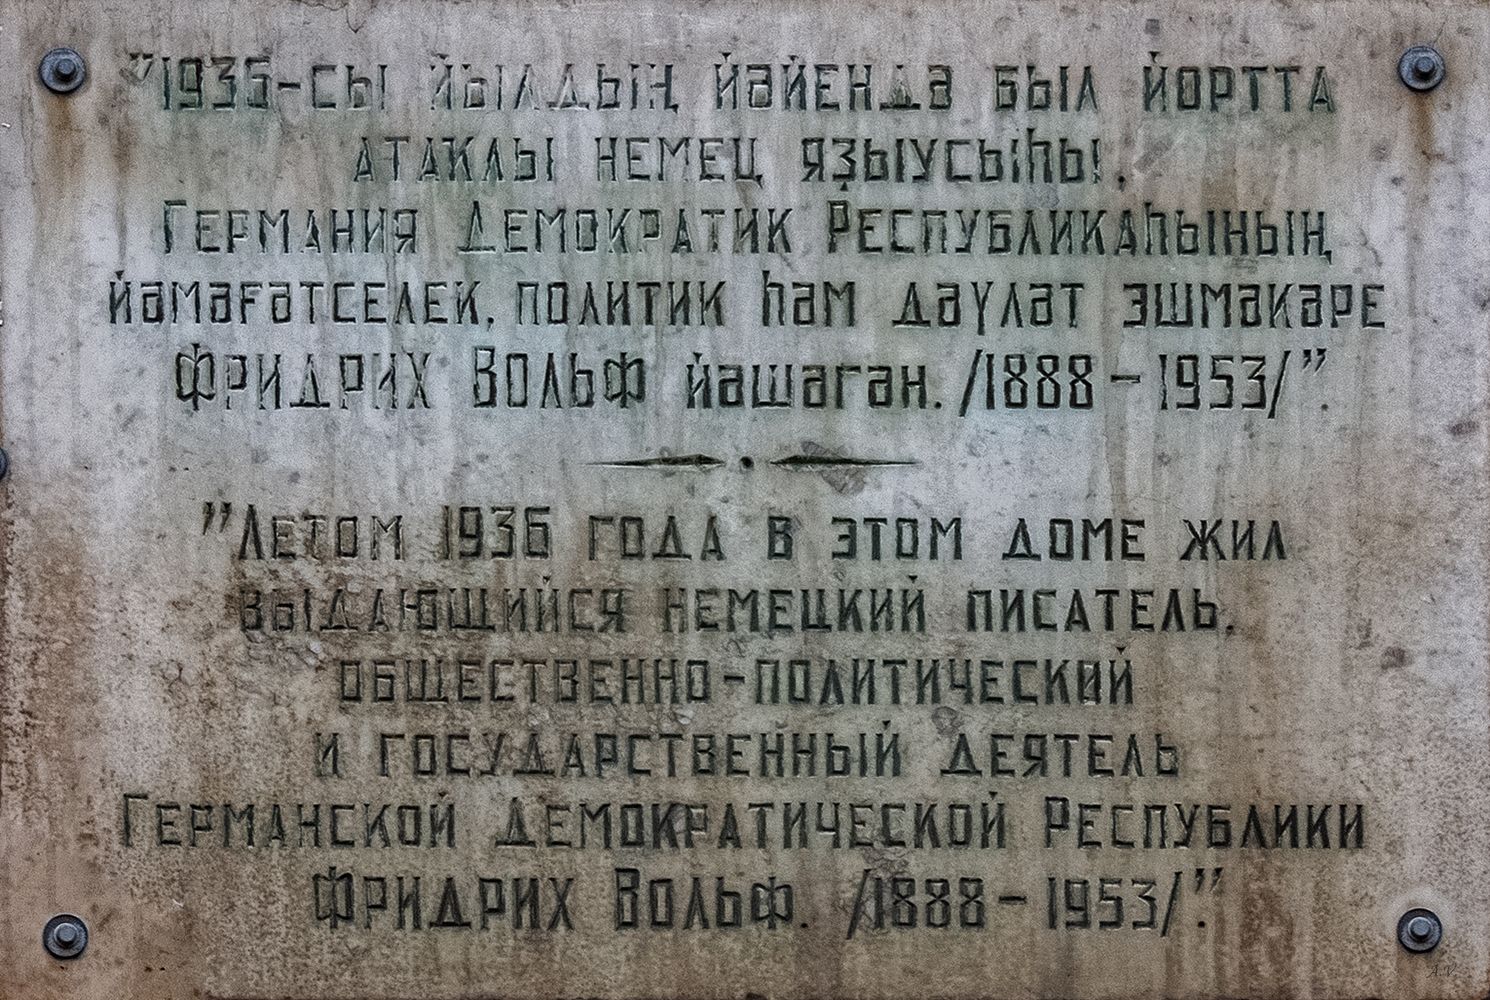 Ufa, Улица Карла Маркса, 17/19. Ufa — Memorial plaques